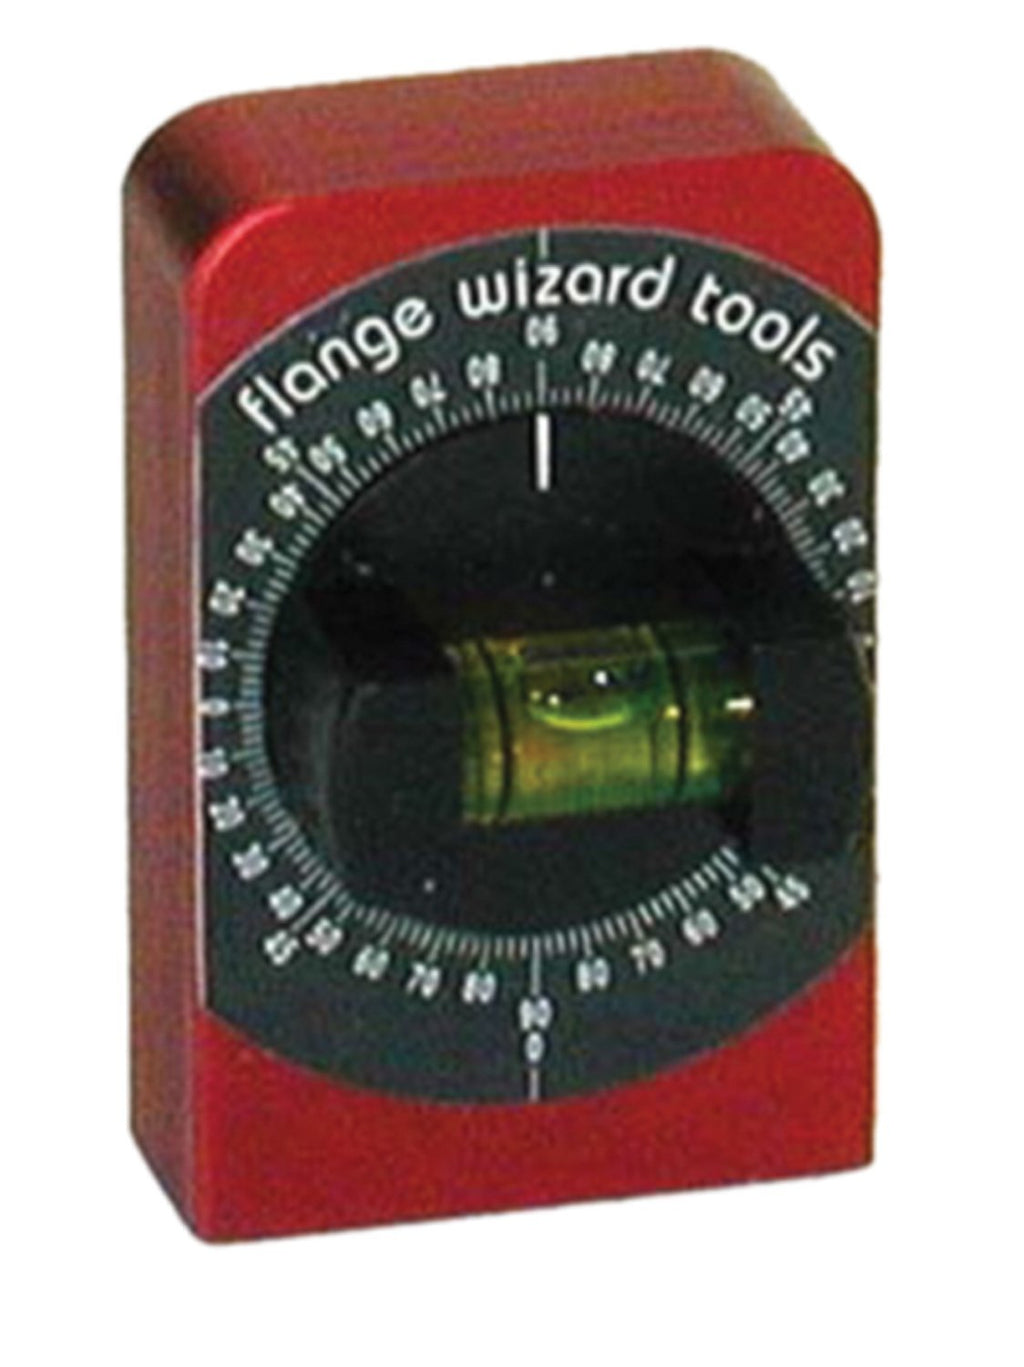  [AUSTRALIA] - Flange Wizard L-2 Degree Levels, 2 3/8", 1 Vial